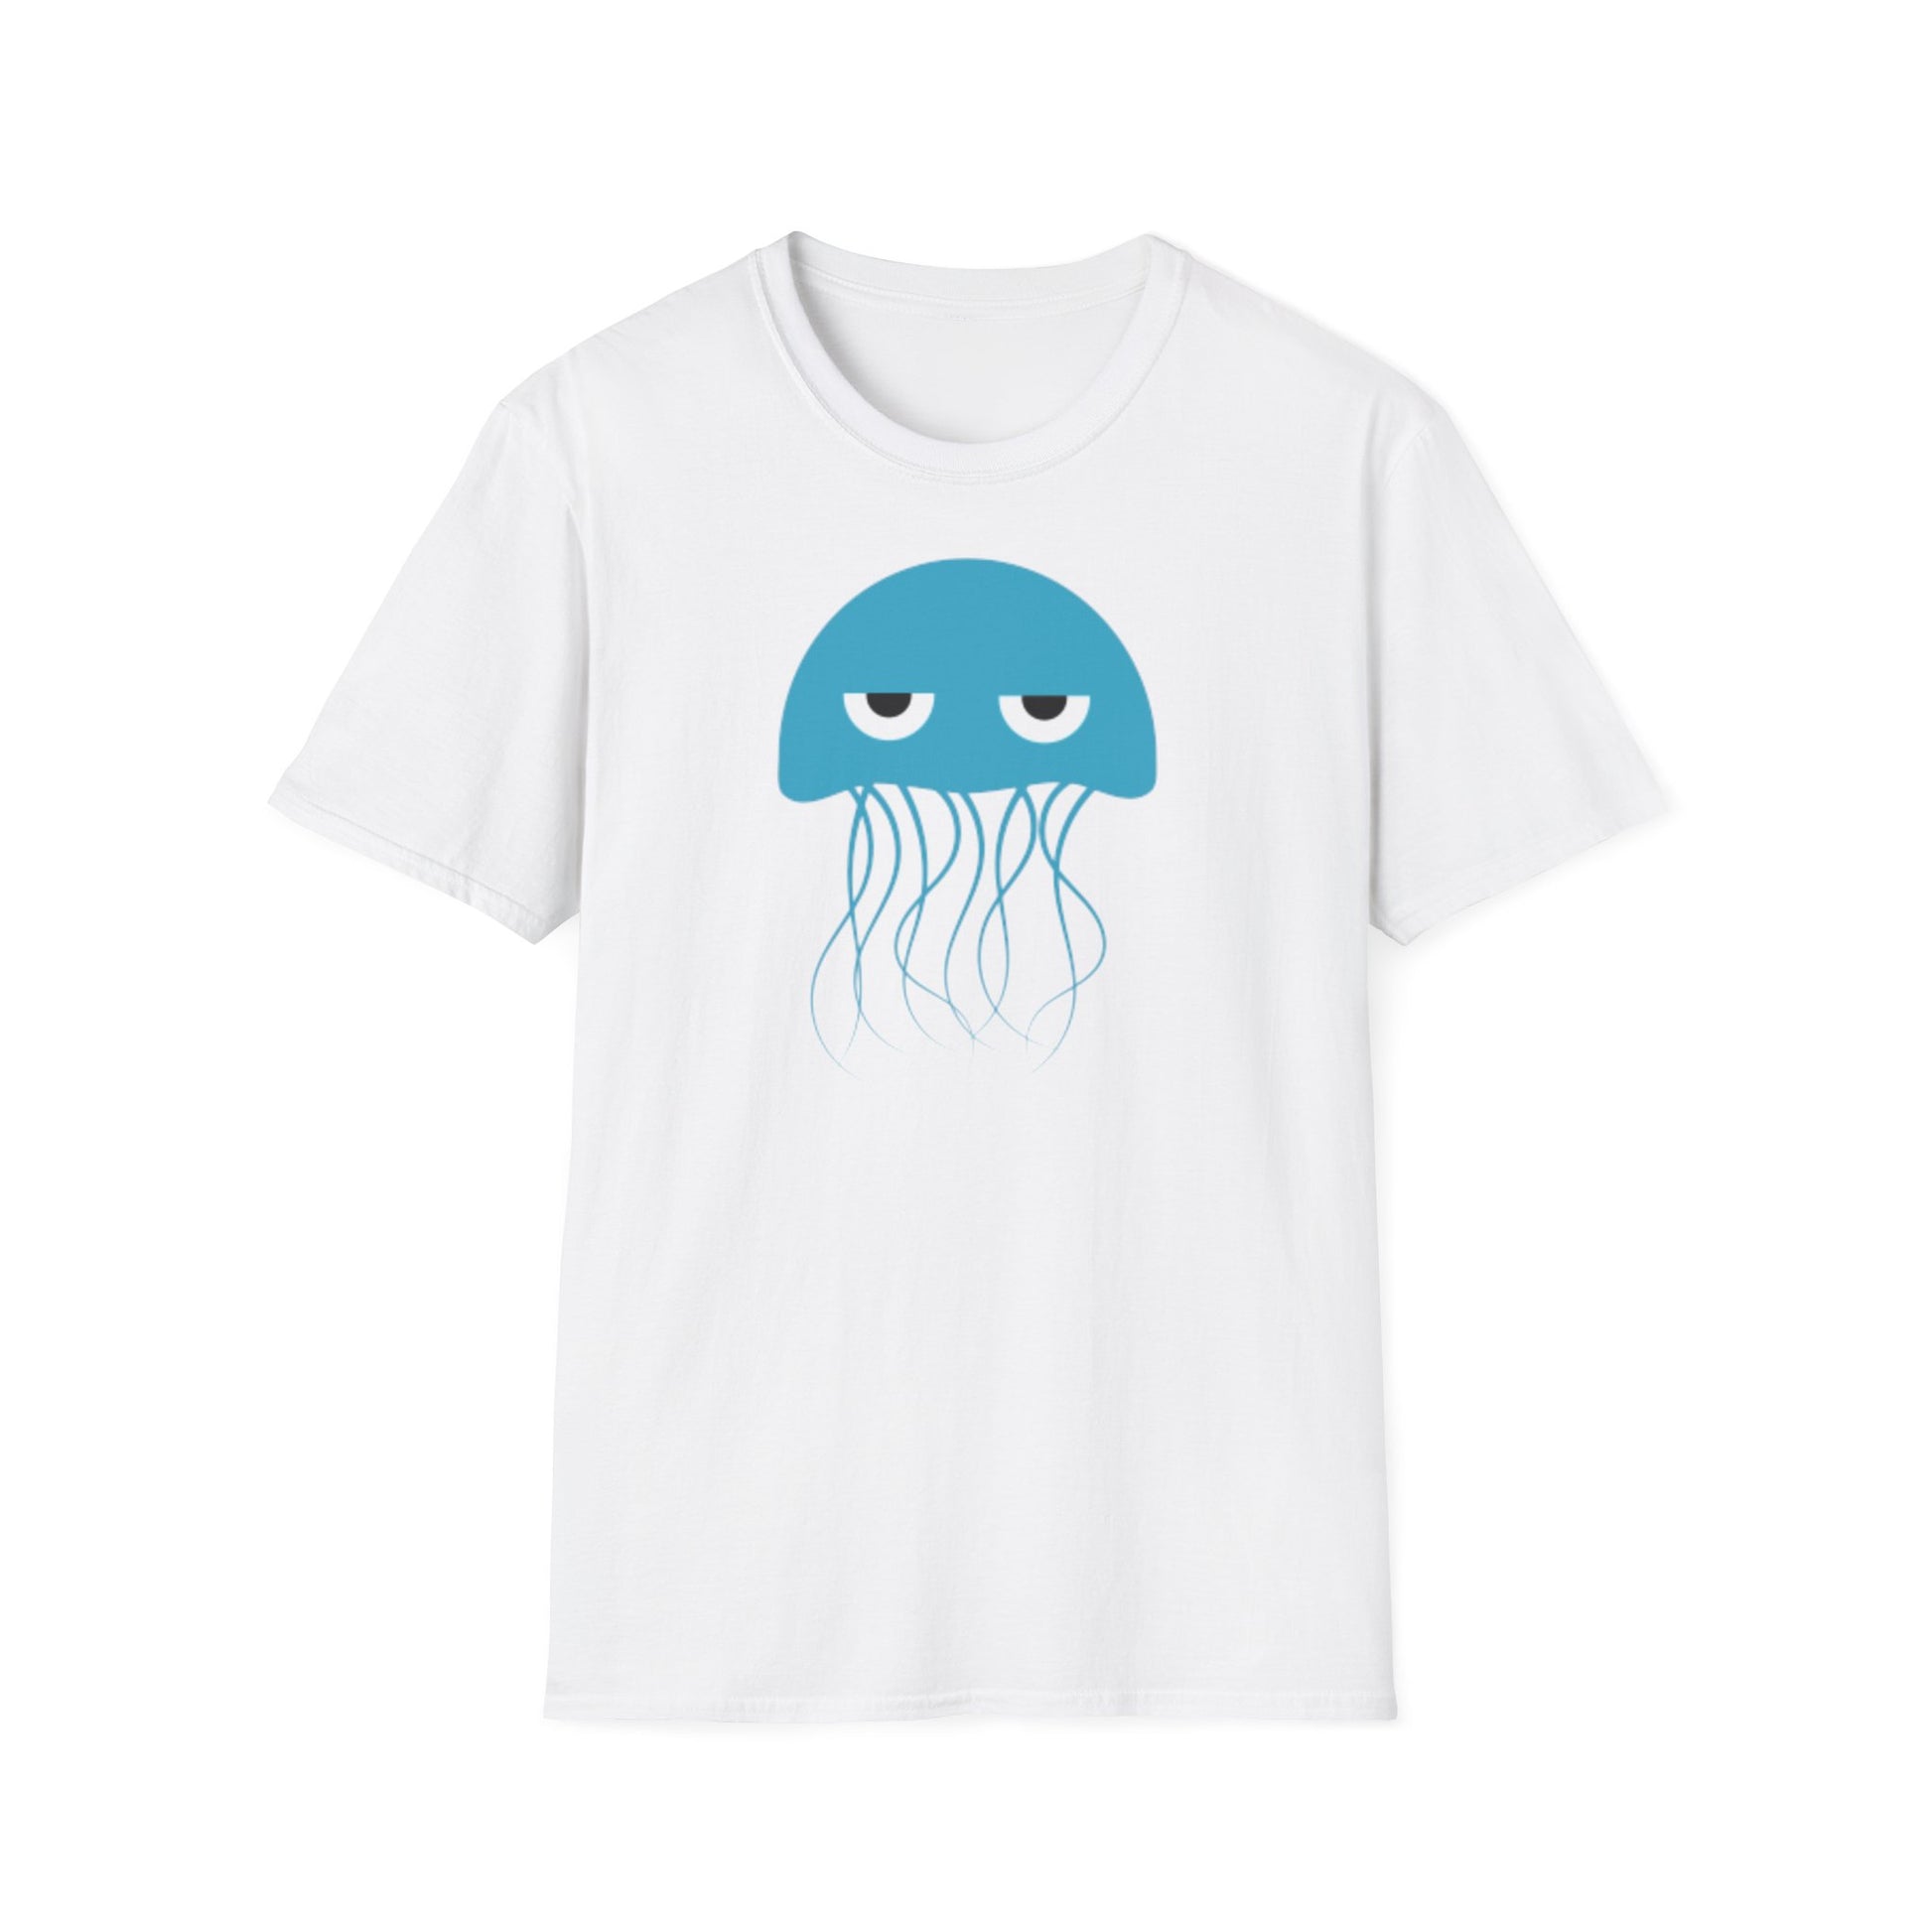 A white t-shirt with a design of a grumpy blue cartoon jellyfish